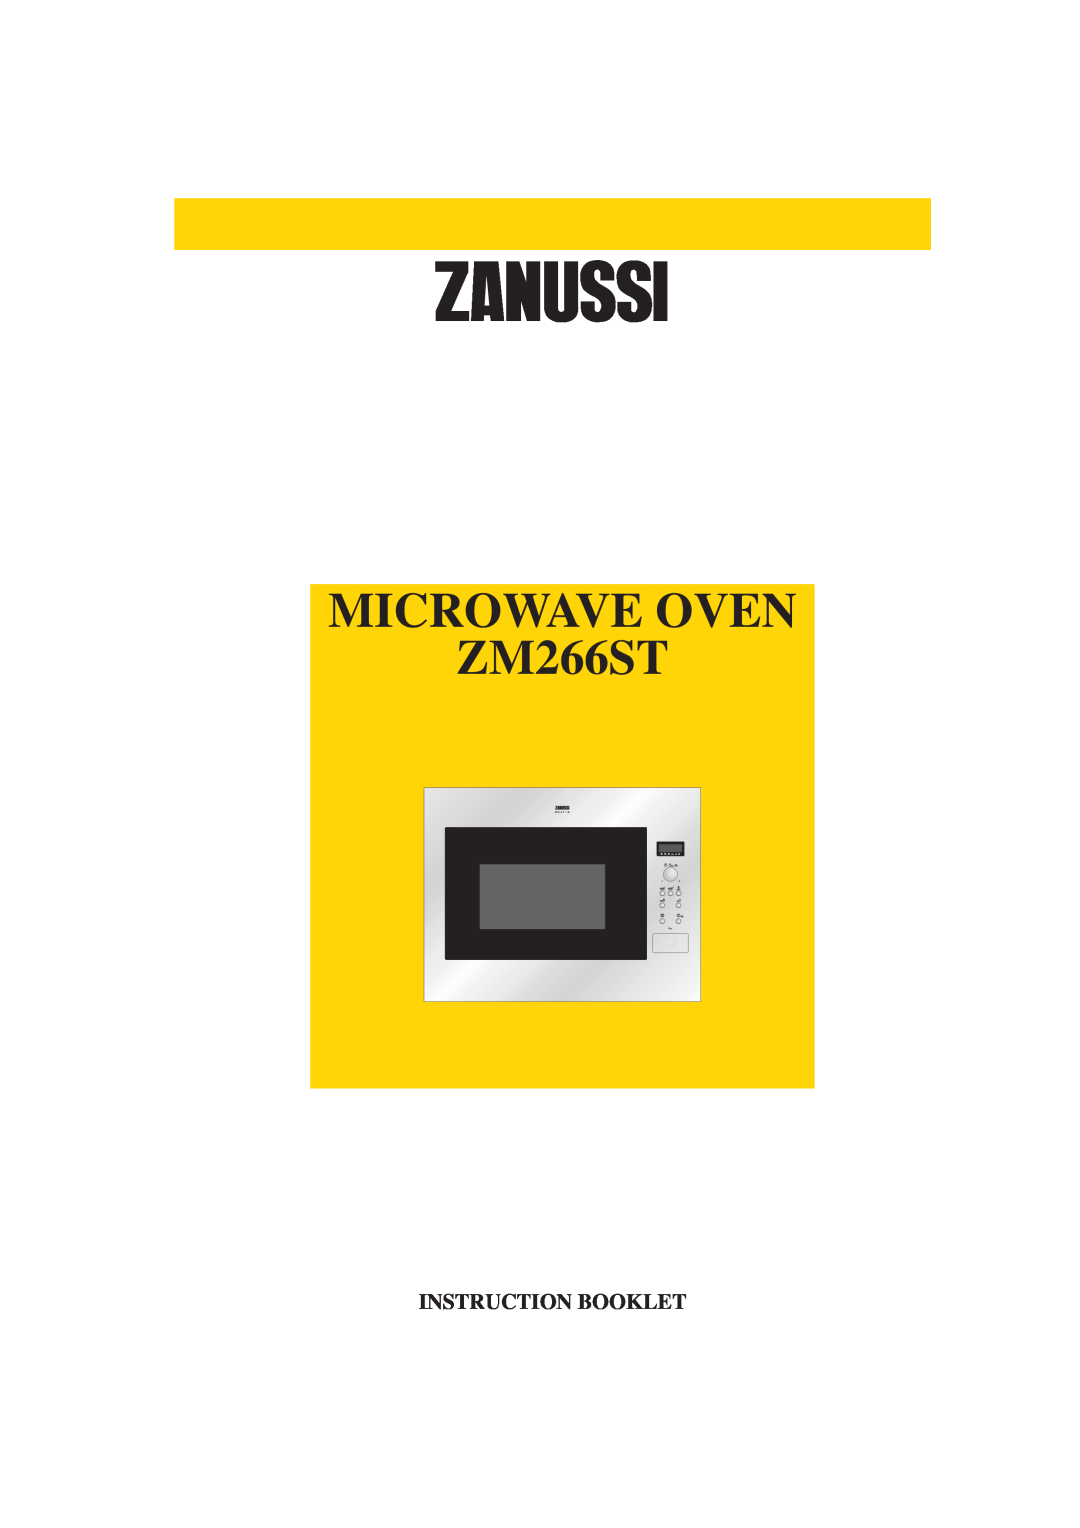 Zanussi manual MICROWAVE OVEN ZM266ST, Instruction Booklet 